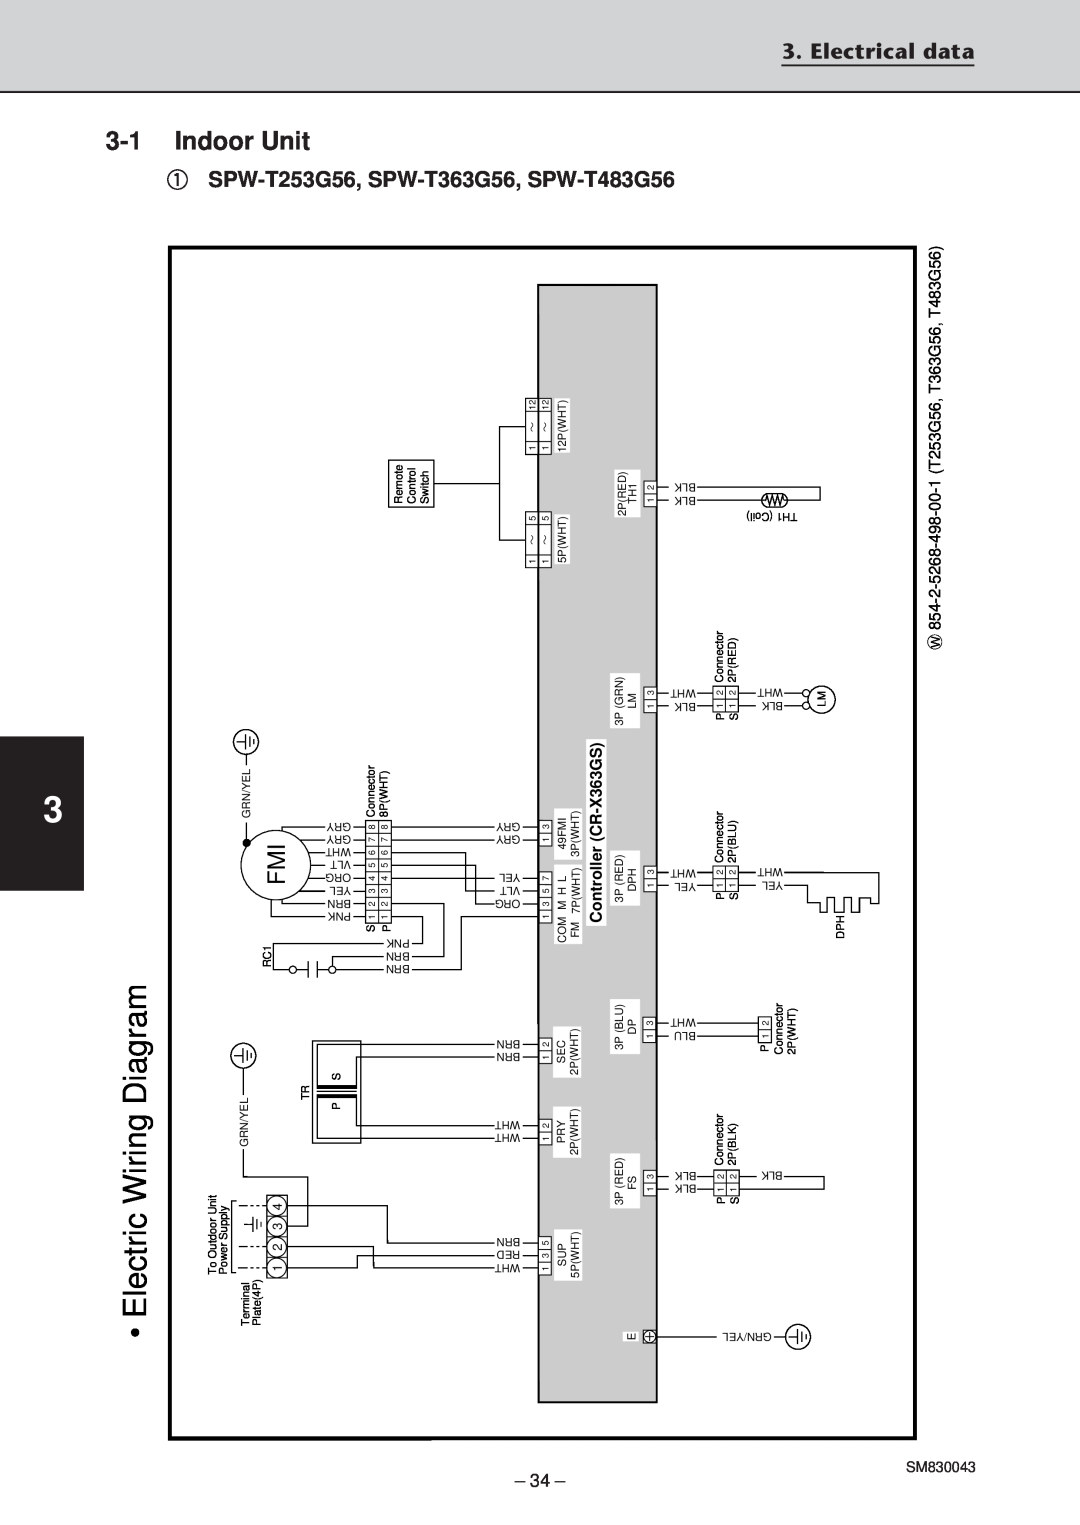 Sanyo SPW-T253GS56, SPW-T363GS56, SPW-T483G56, SPW-T483GS56, SPW-C363G8 Wiring Diagram, 3-1Indoor Unit, Electrical data 